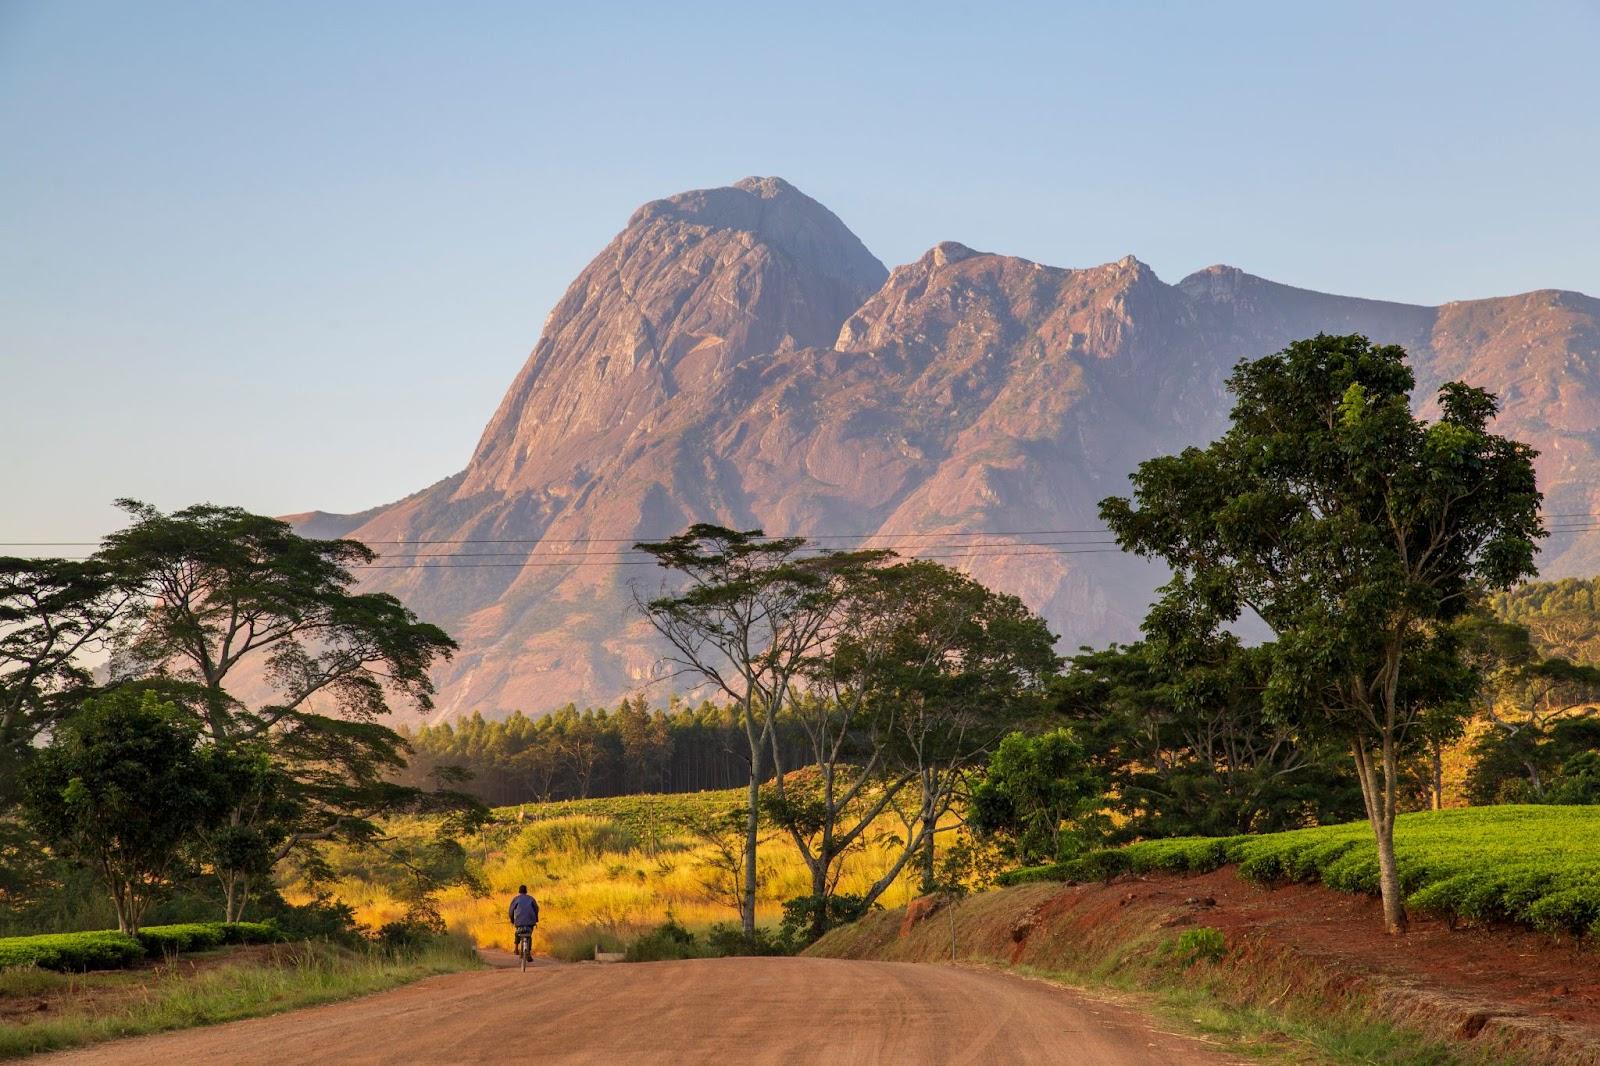 Mulanje Massif (mountain) in Malawi